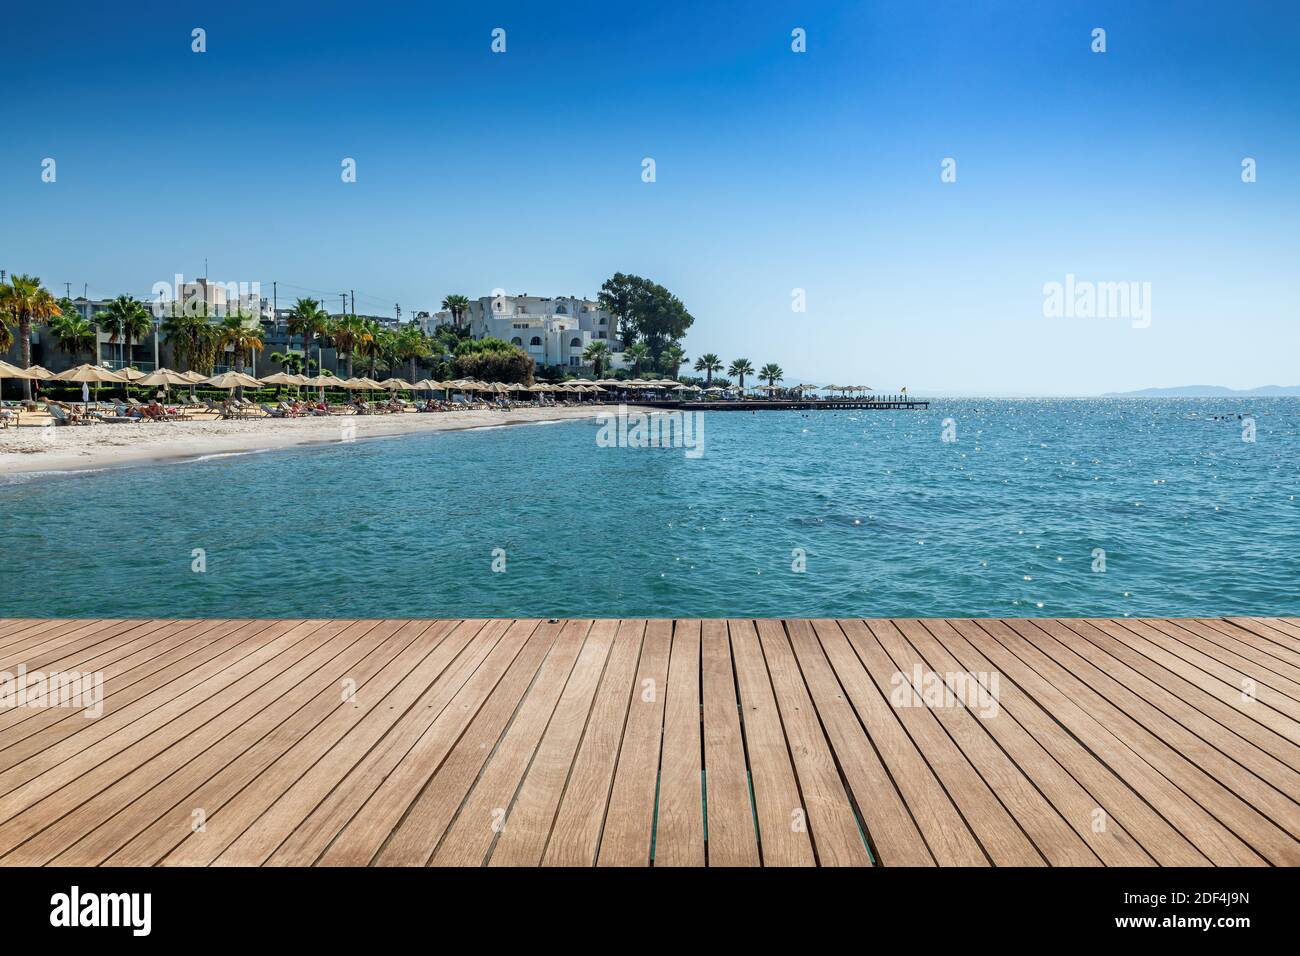 Wooden floor on a sea pier and beautiful beach resort on Mediterranean sea Stock Photo